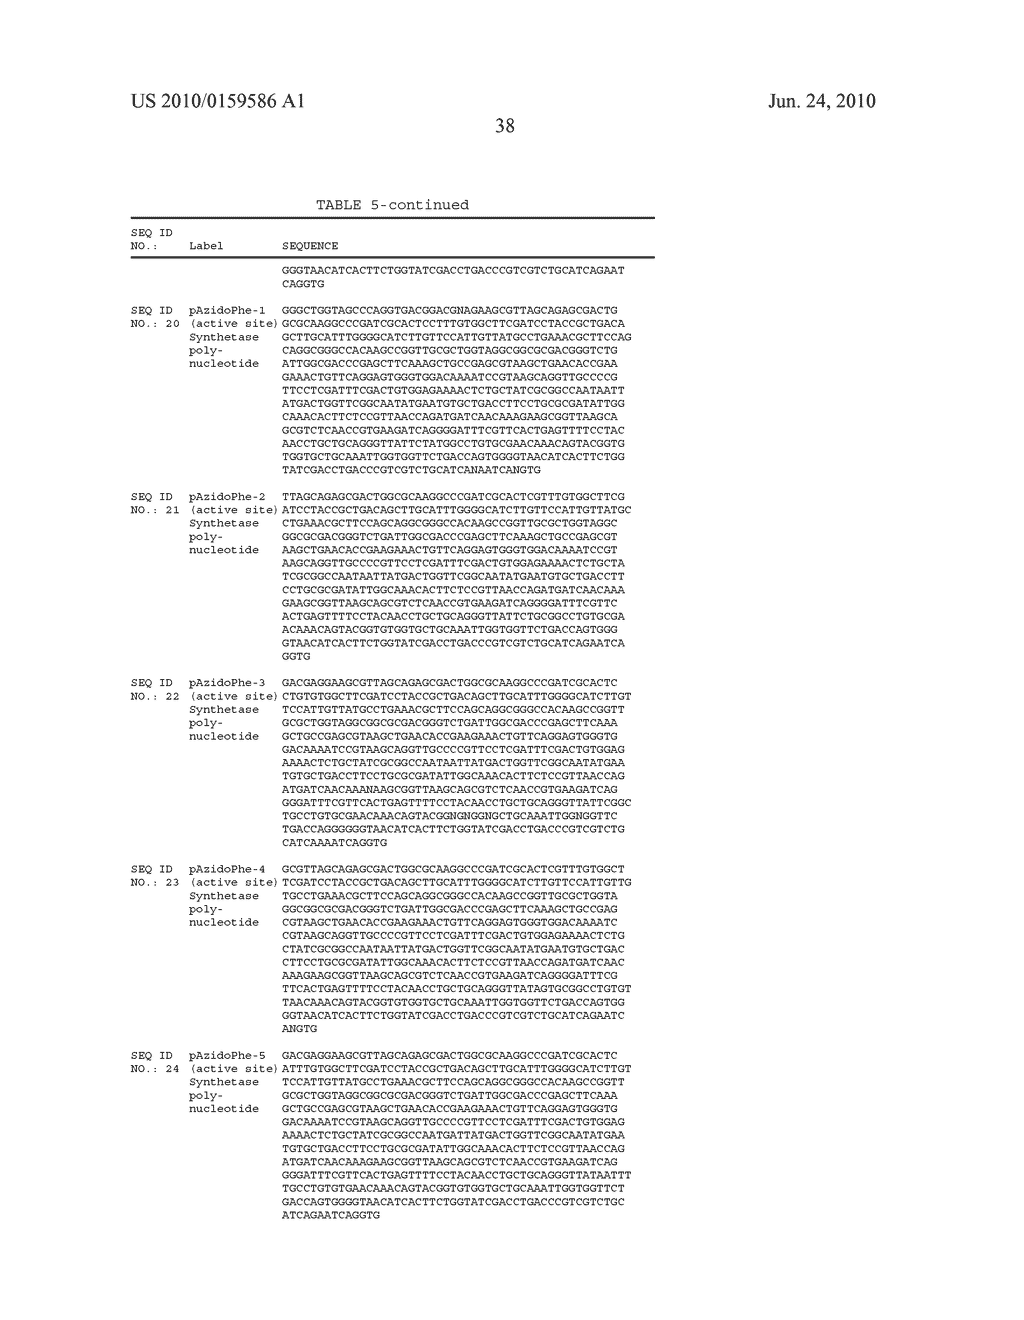 Hybrid Suppressor tRNA for Vertebrate Cells - diagram, schematic, and image 40